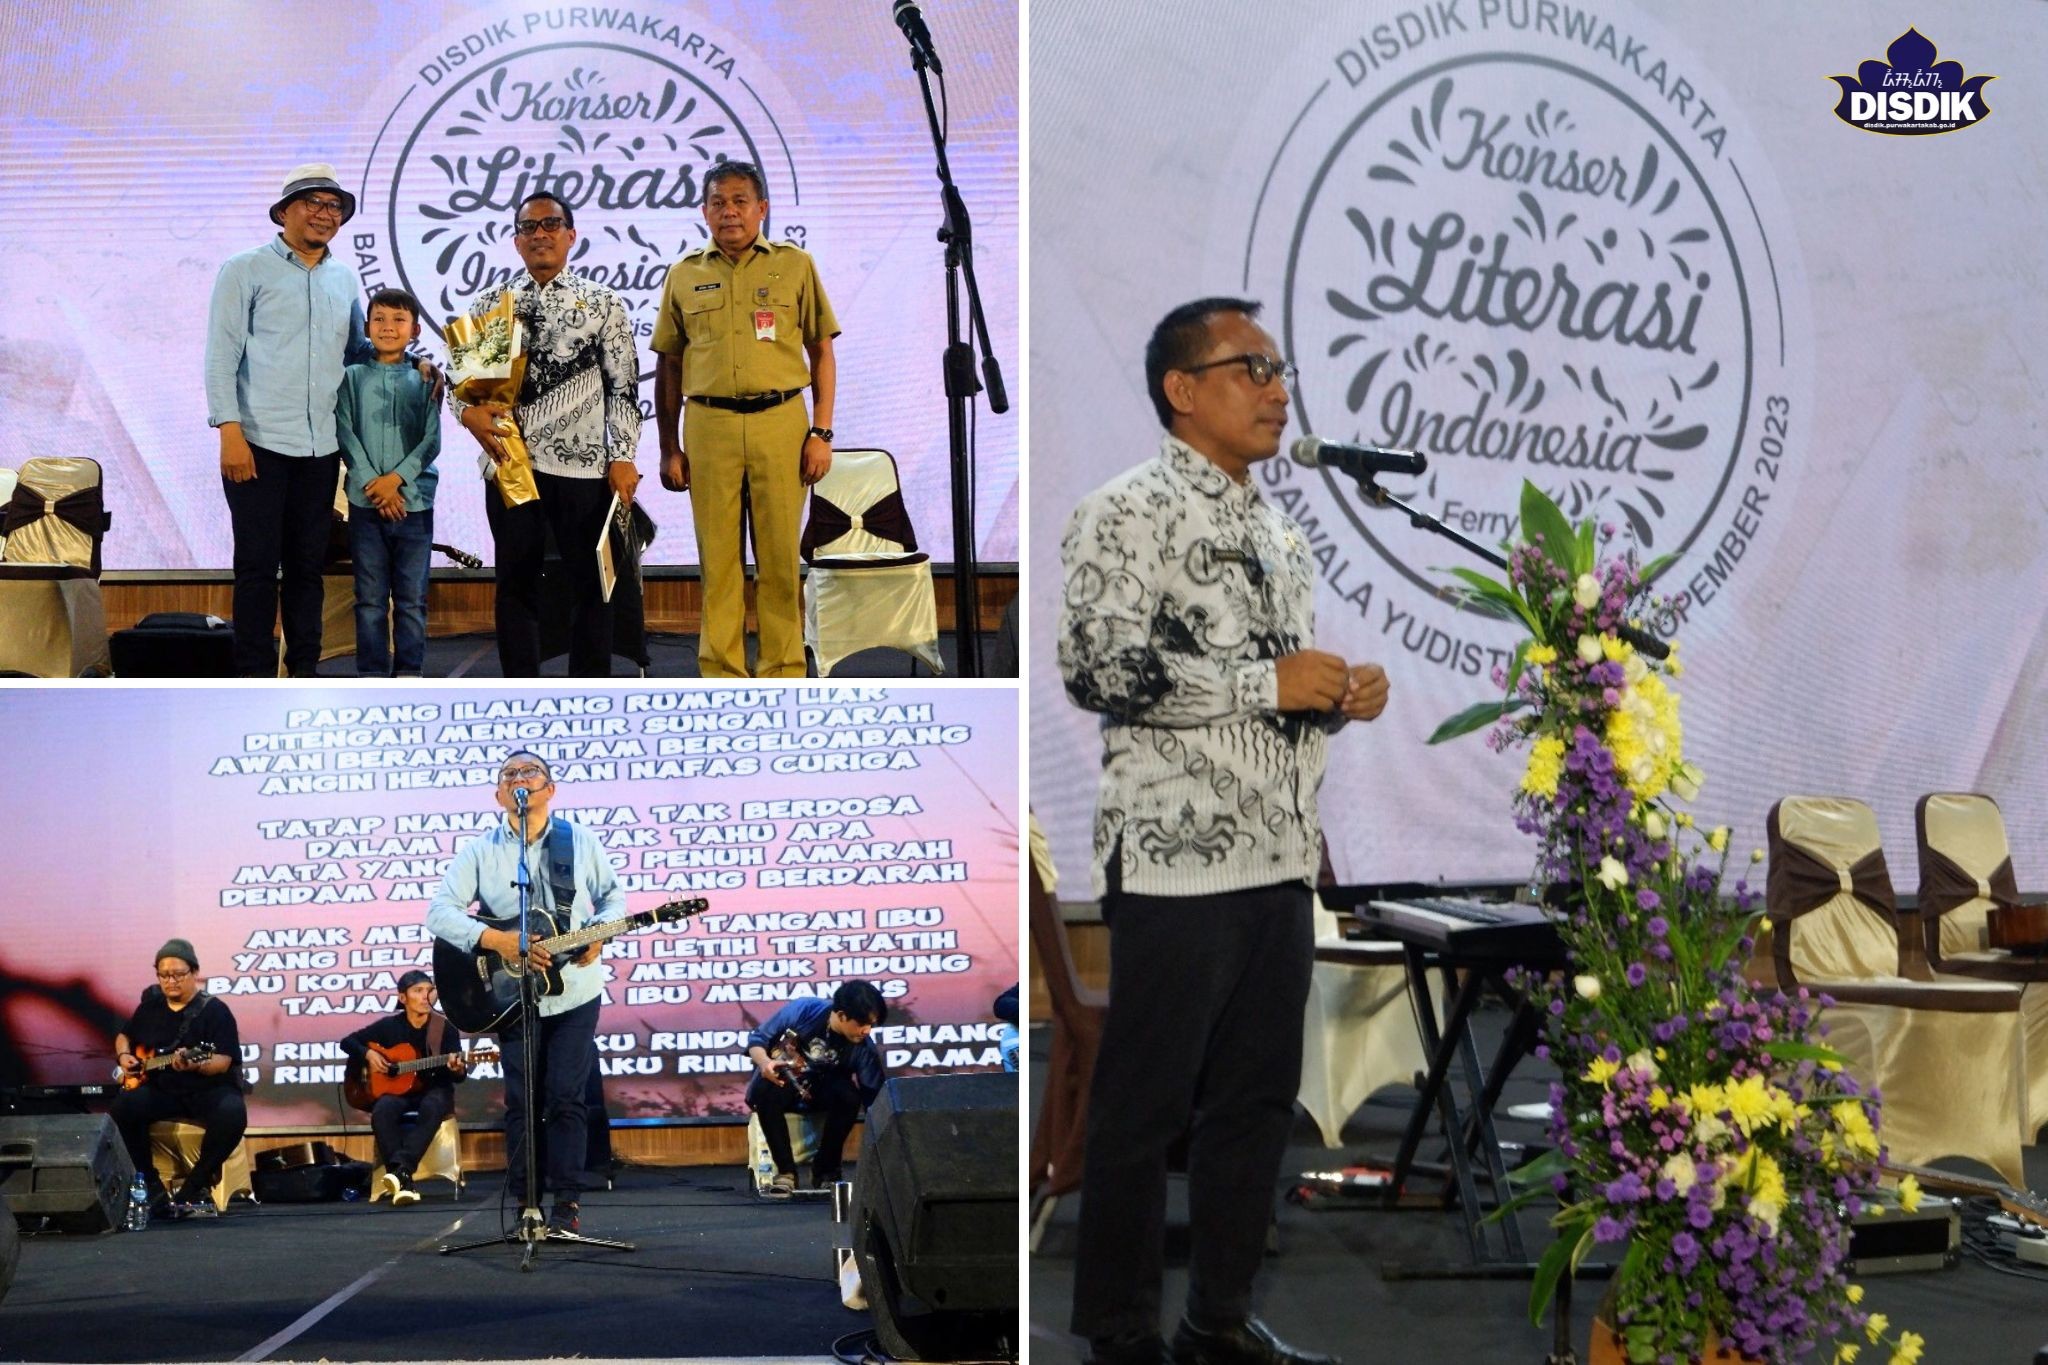 Disdik Purwakarta Bersama Ferry Curtis Jadi Pionir Konser Literasi Pertama di Indonesia